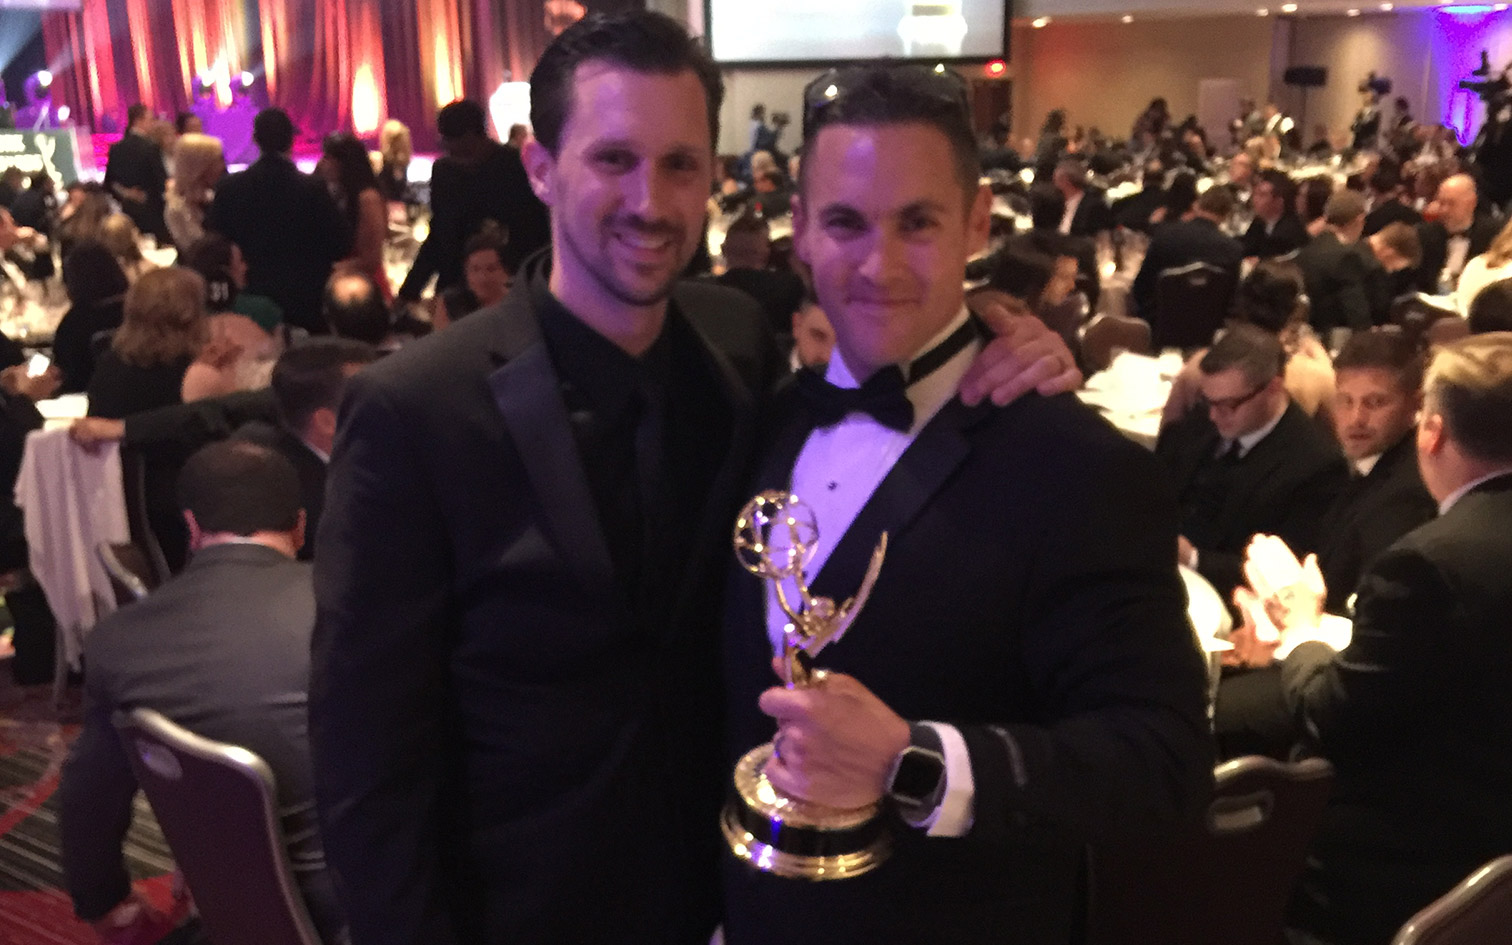 Anthony Carrozzo and Matthew Cassella win an Emmy